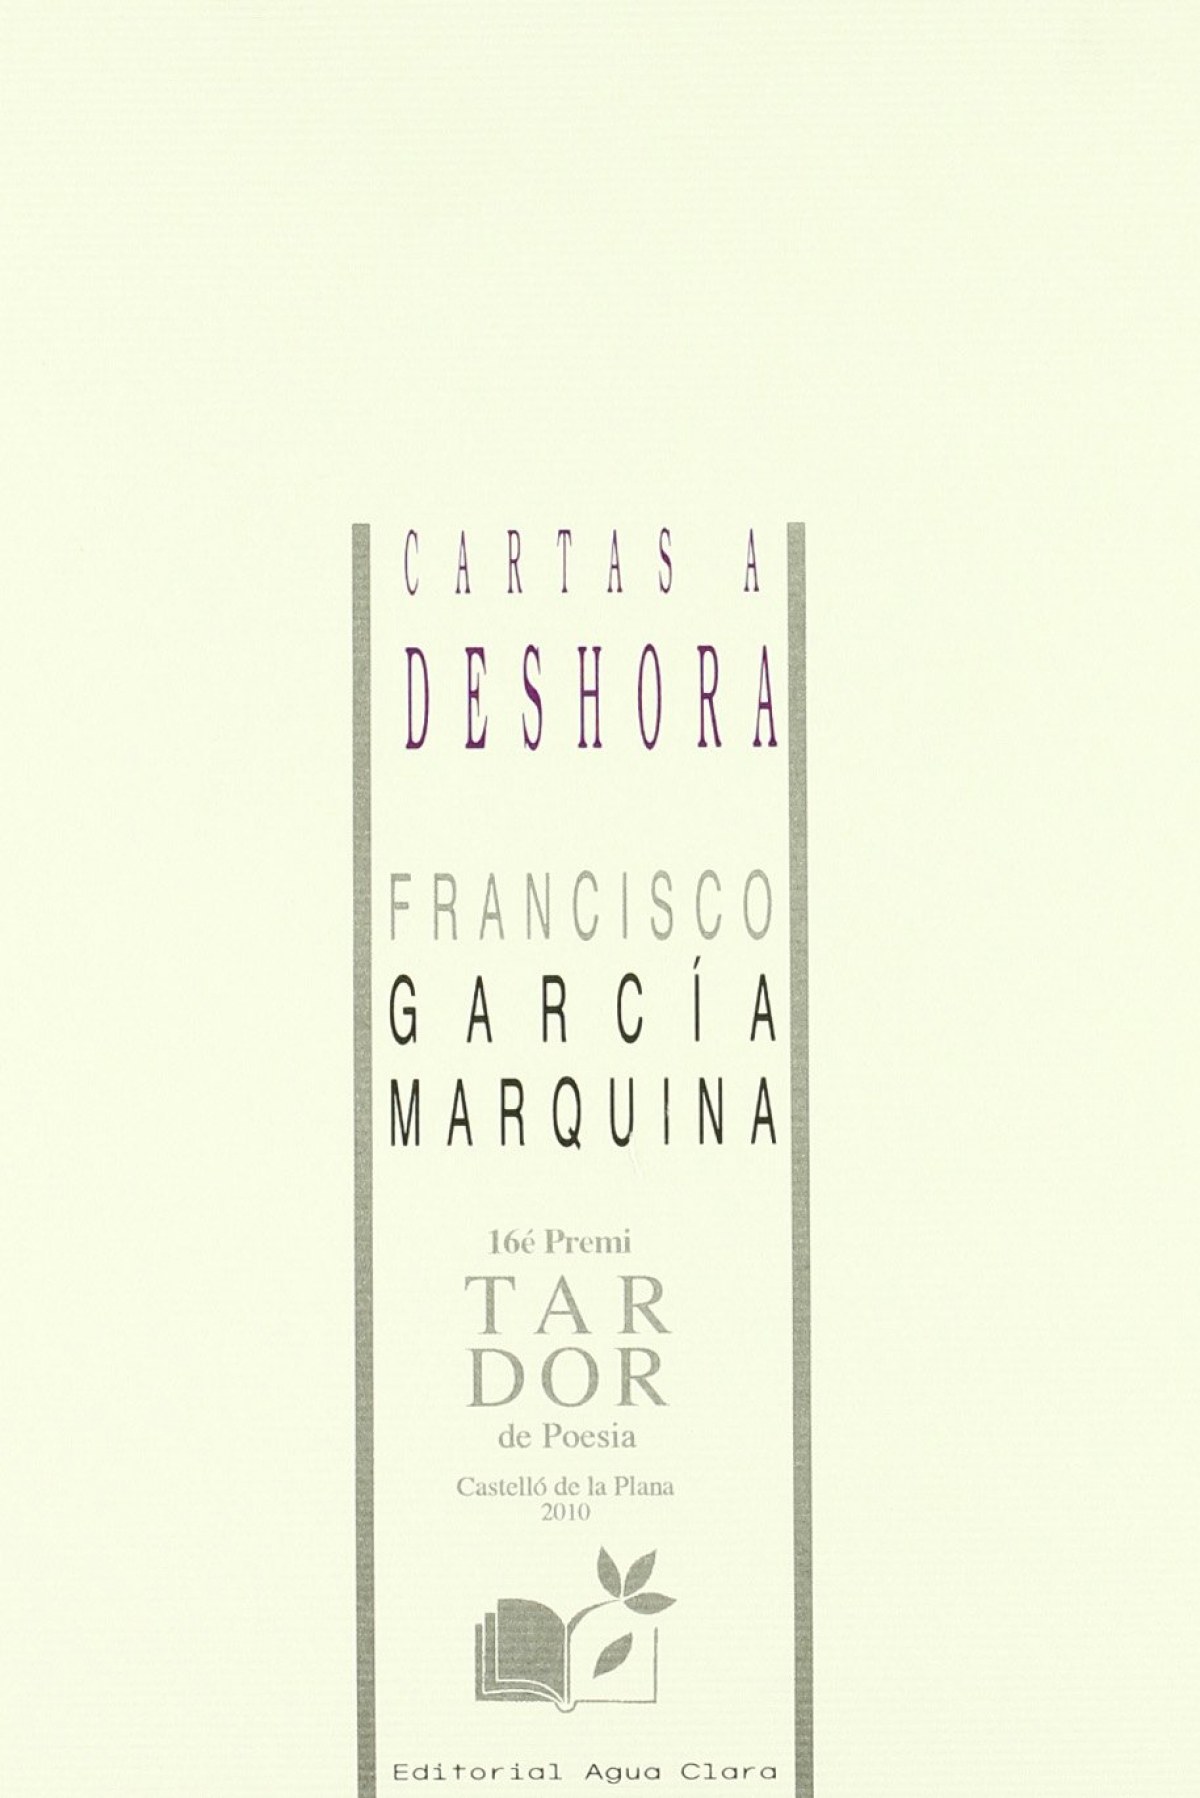 Cartas a deshora - García Marquina, Francisco